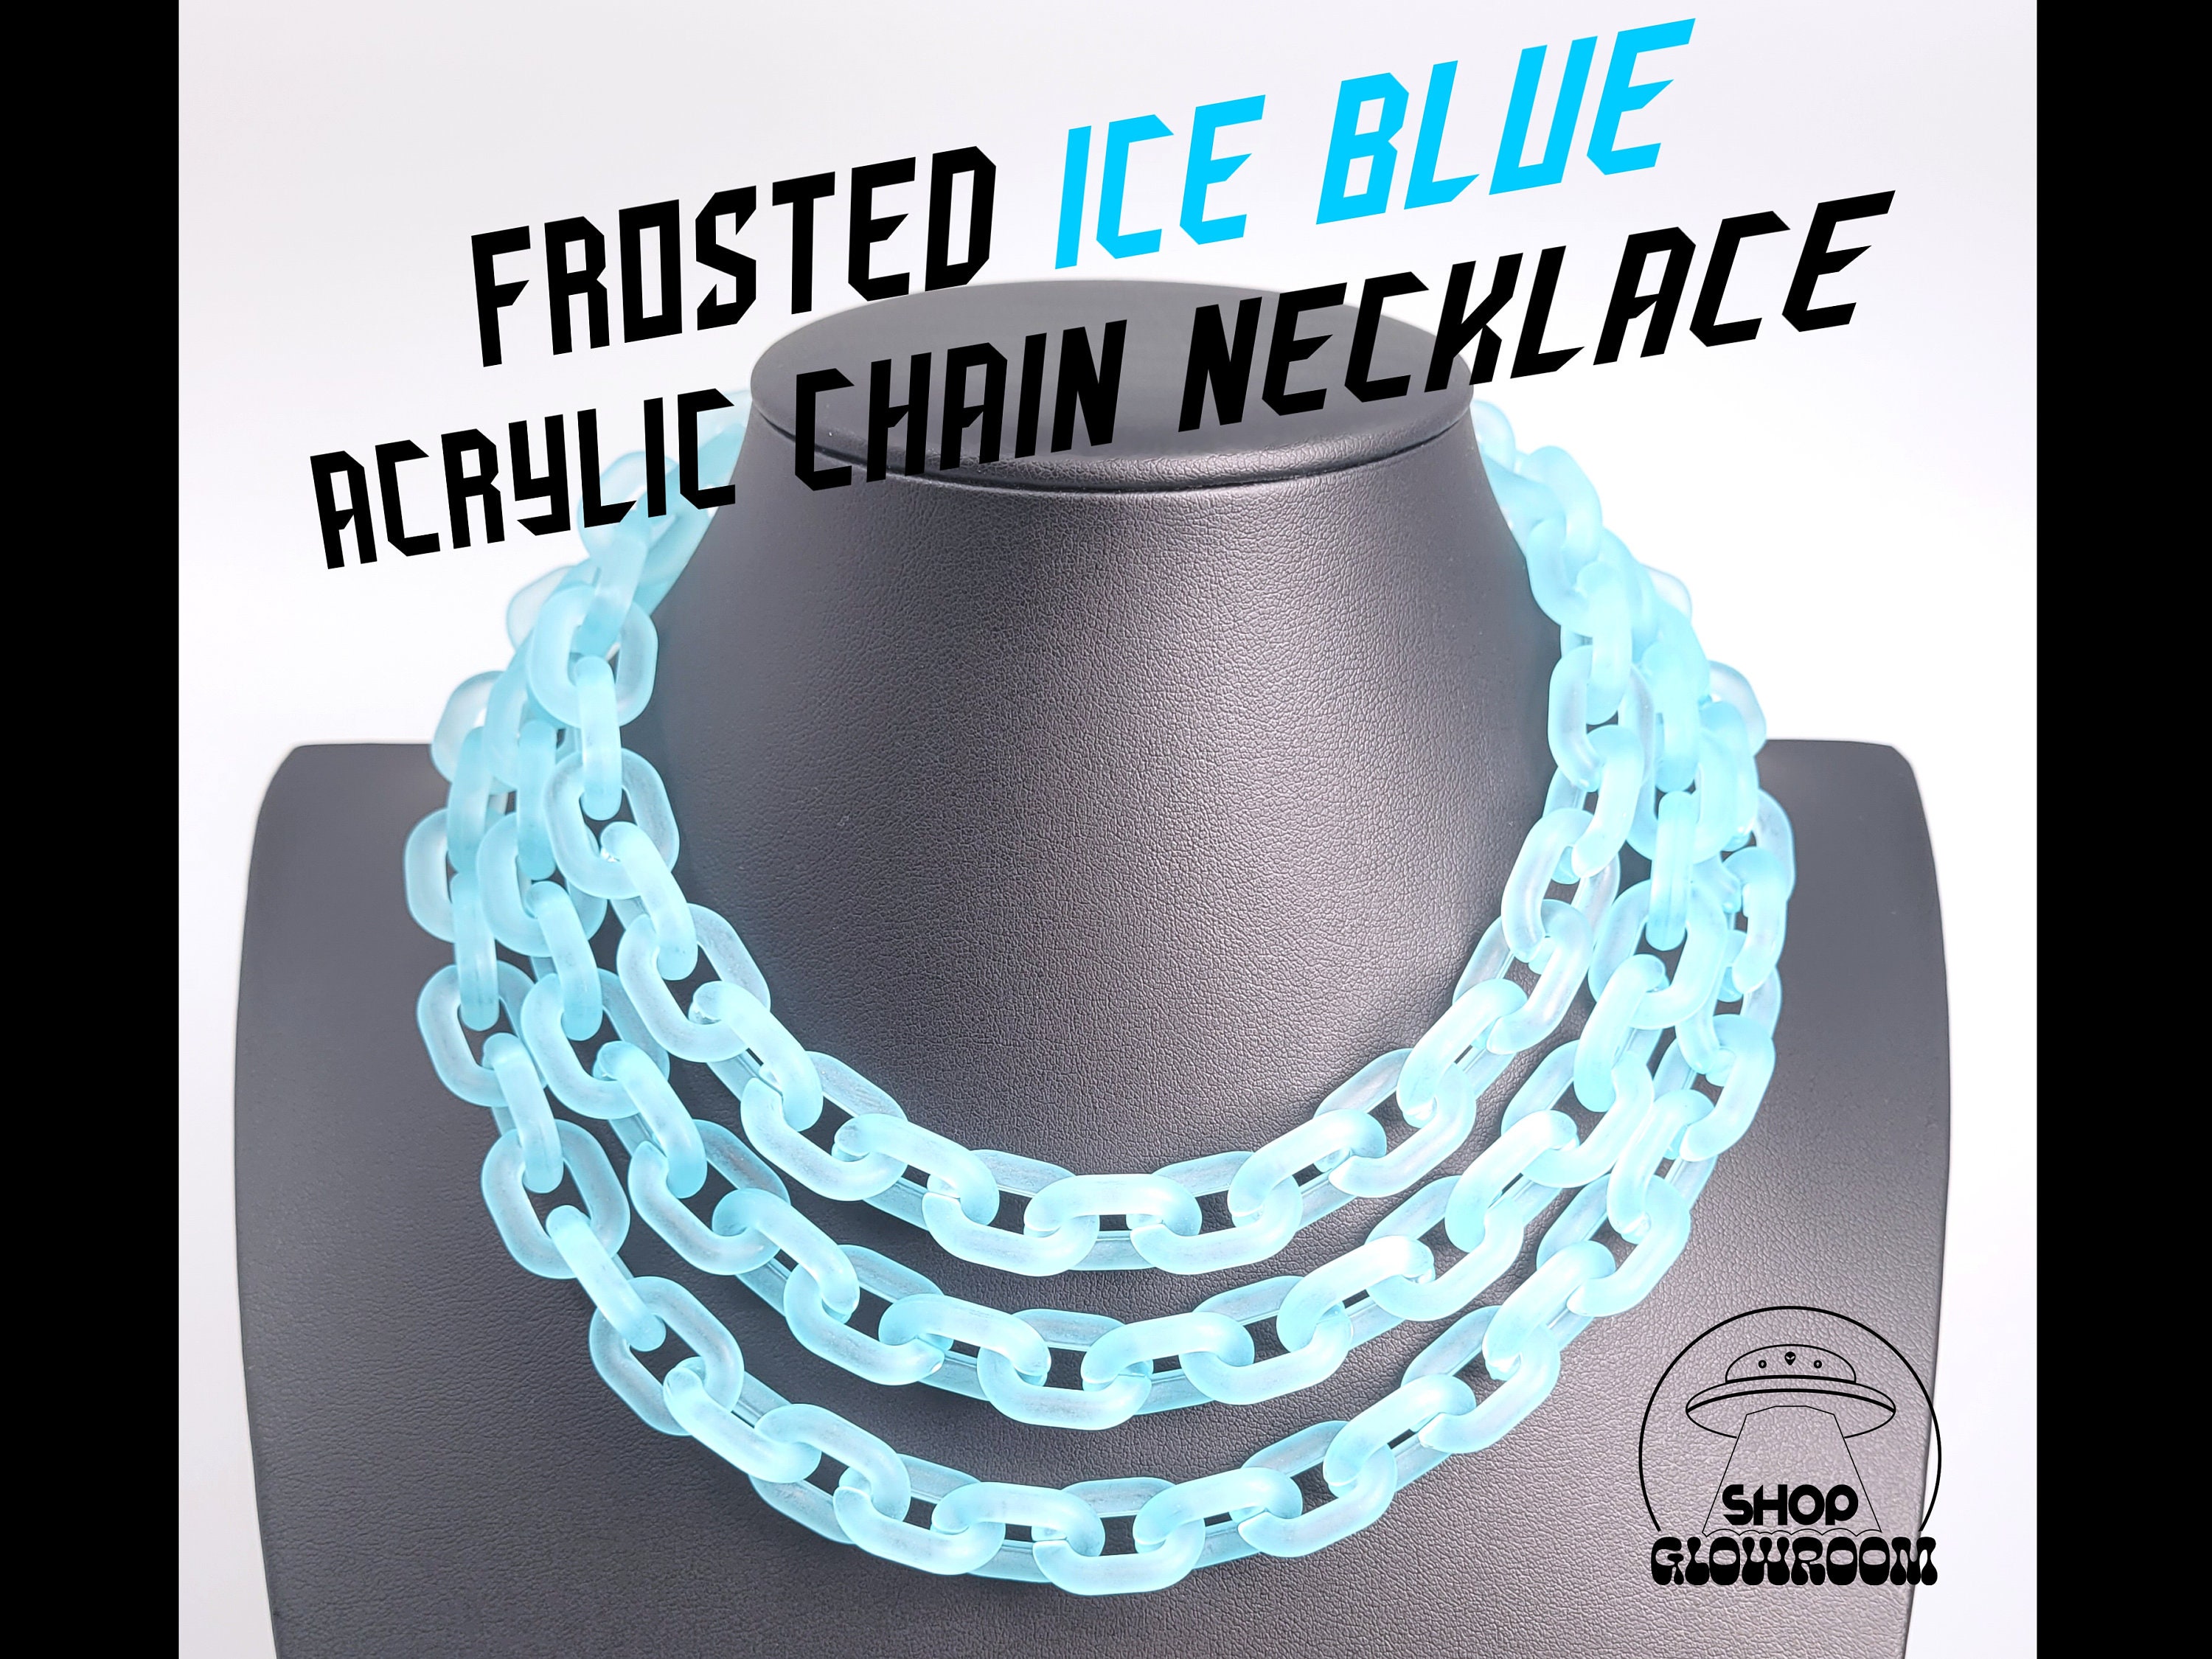 Cuban Link Miami Cuban Chain Acrylic Necklace Cool Chain Clear